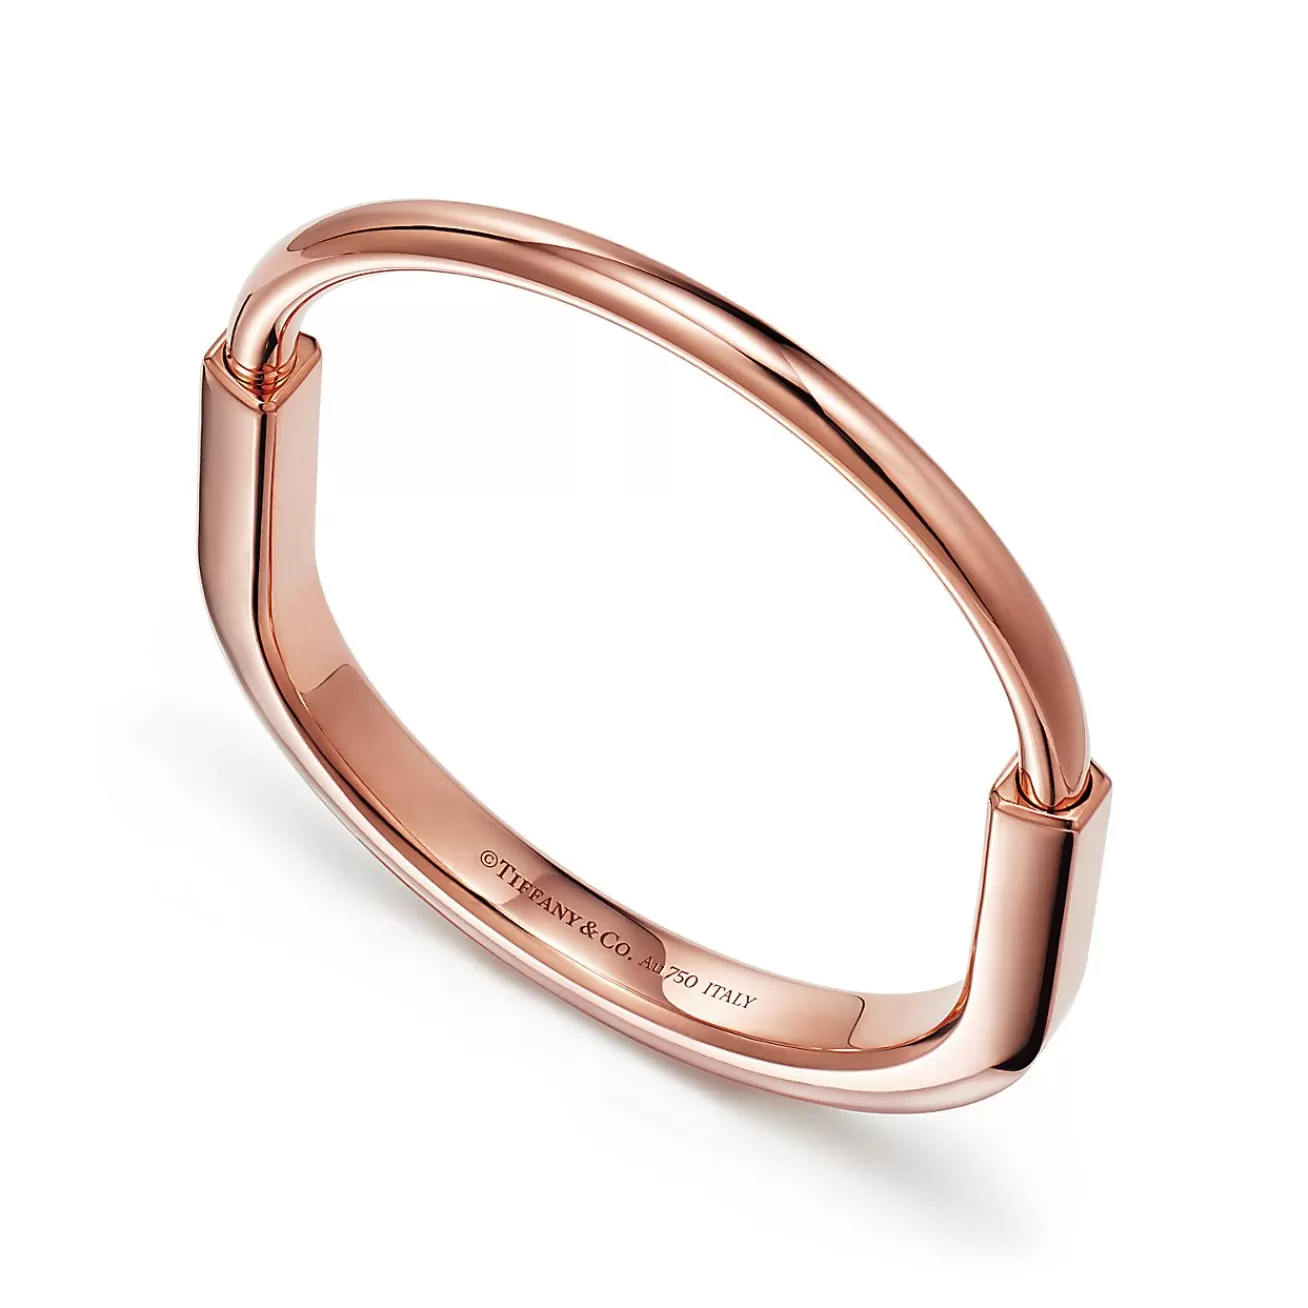 Tiffany & Co. Tiffany Lock Bangle in Rose Gold | ^ Bracelets | Men's Jewelry